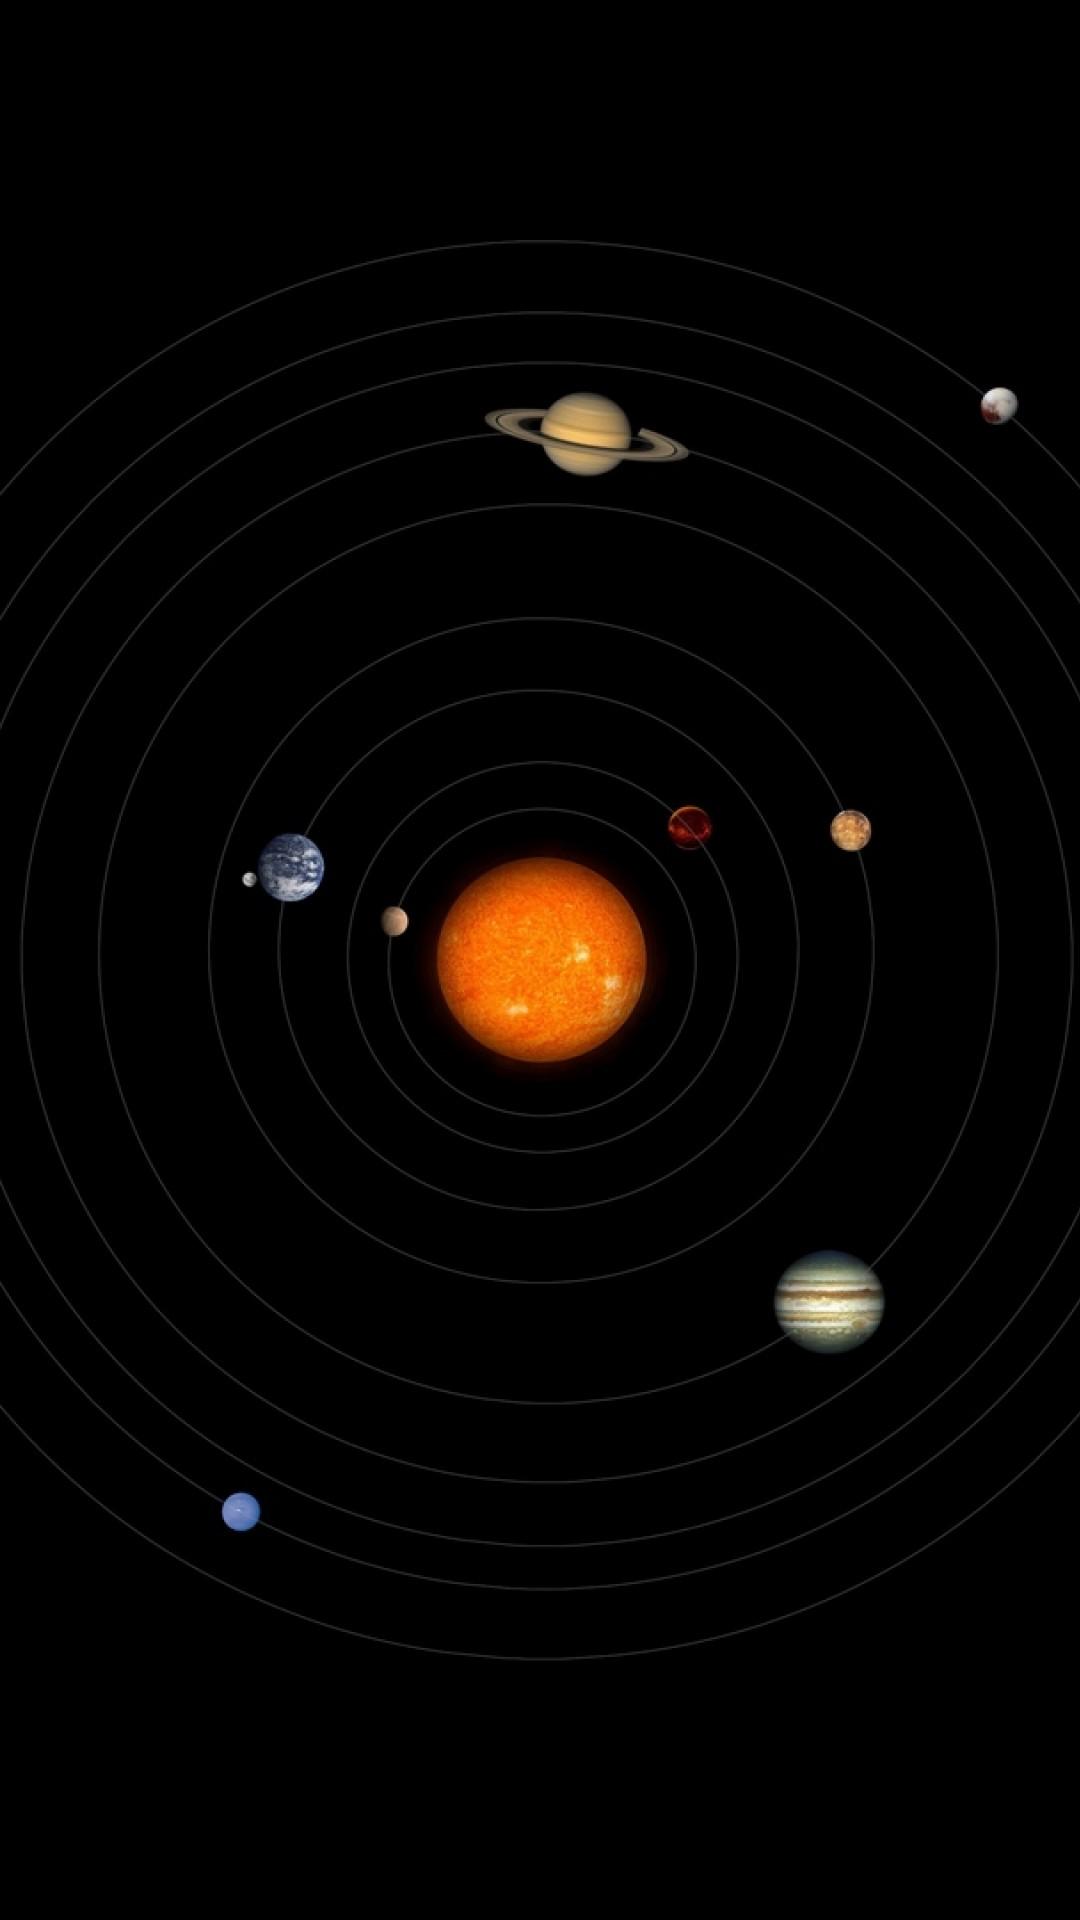 Solar system circles HD Wallpaper iPhone 6 / 6S Plus